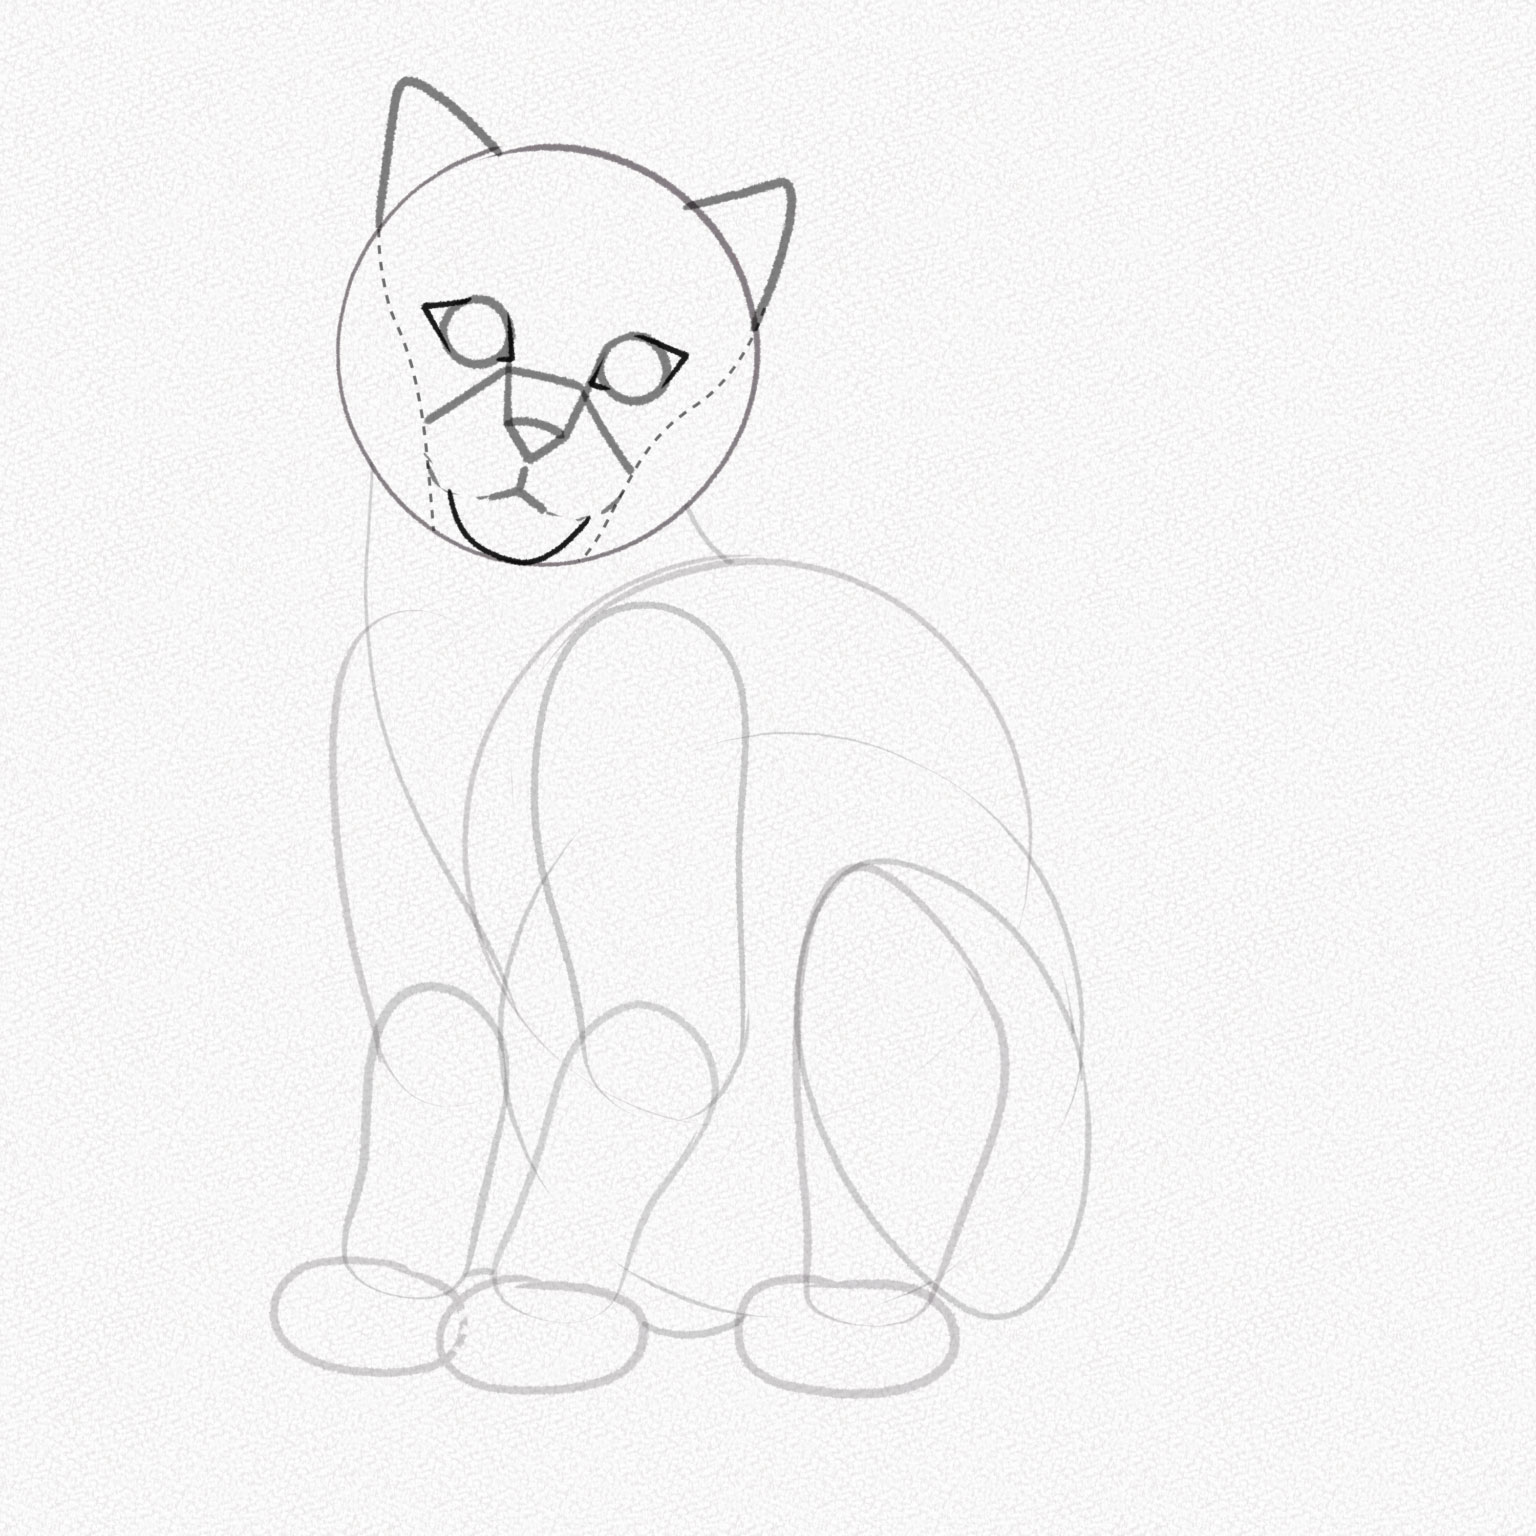 chi tiết kiểu vẽ con cái mèo